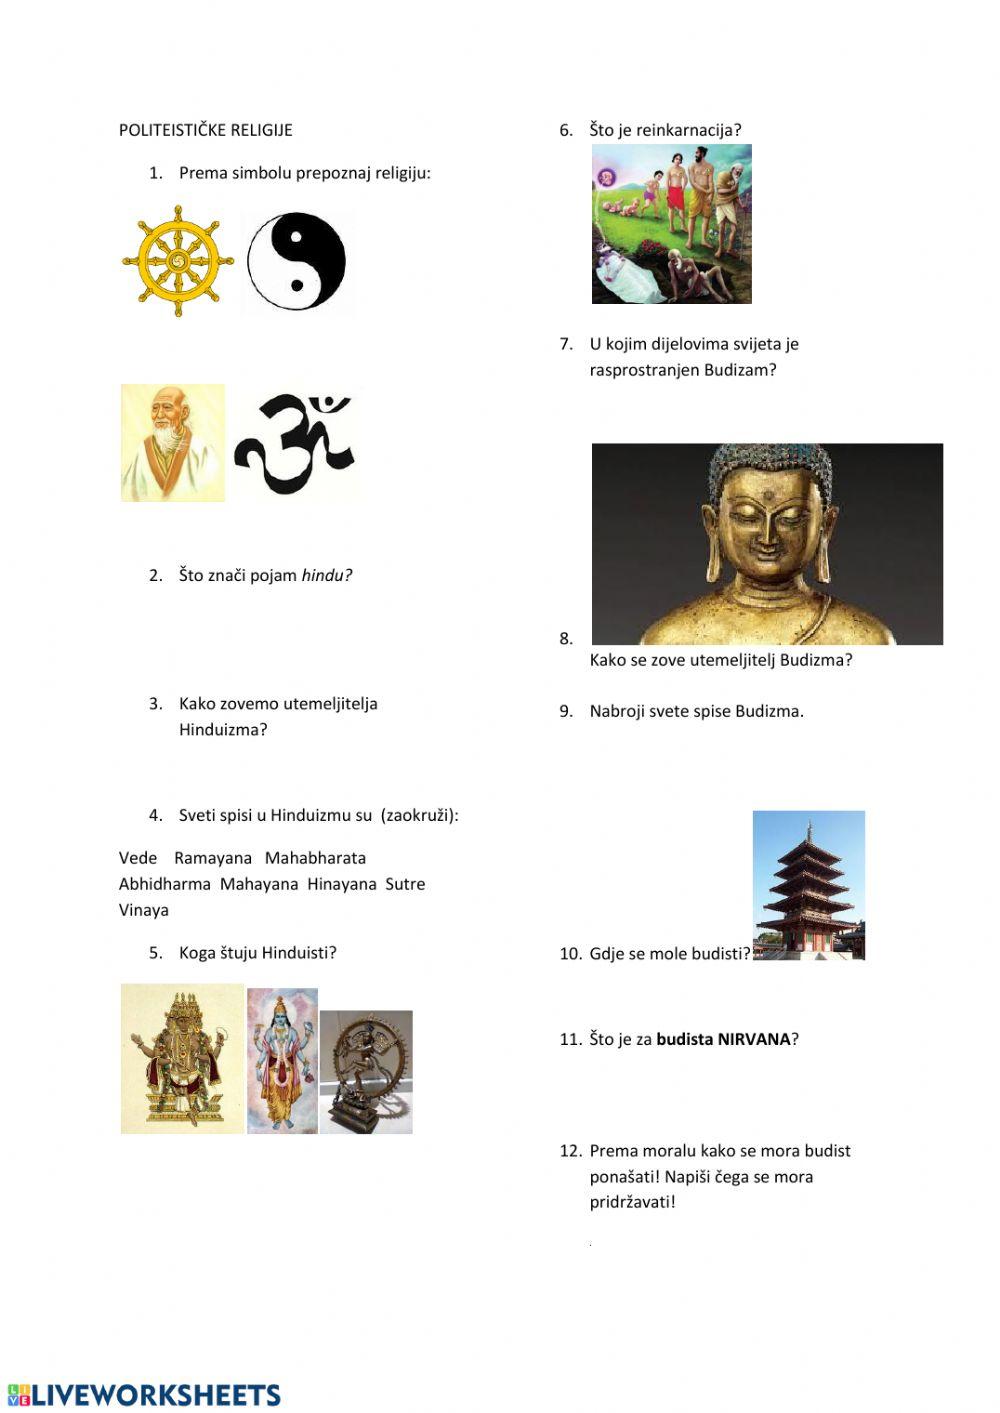 Budizam i Hinduizam